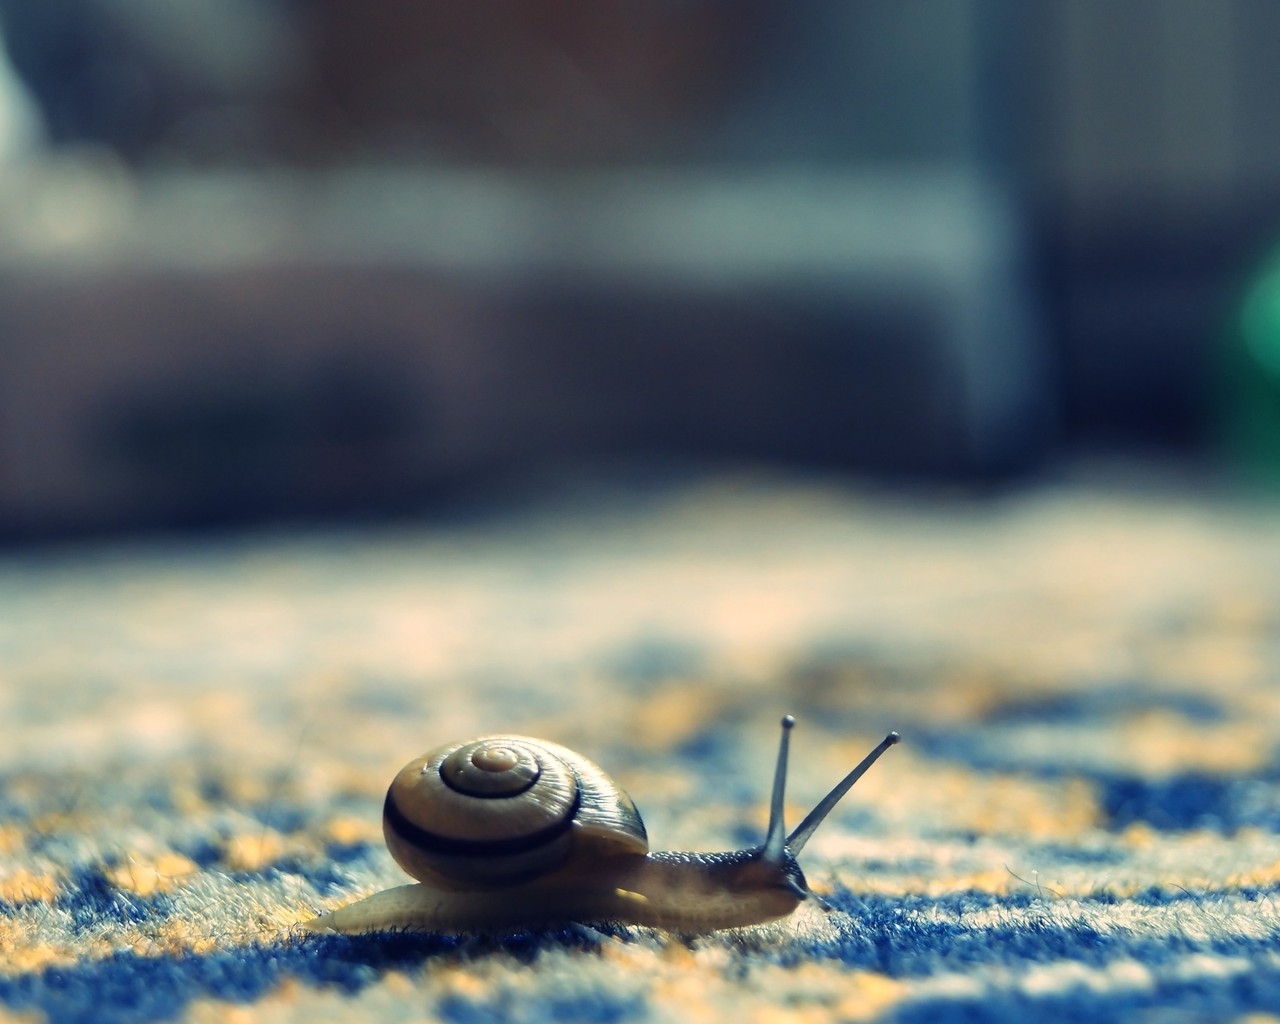 Little Snail for 1280 x 1024 resolution